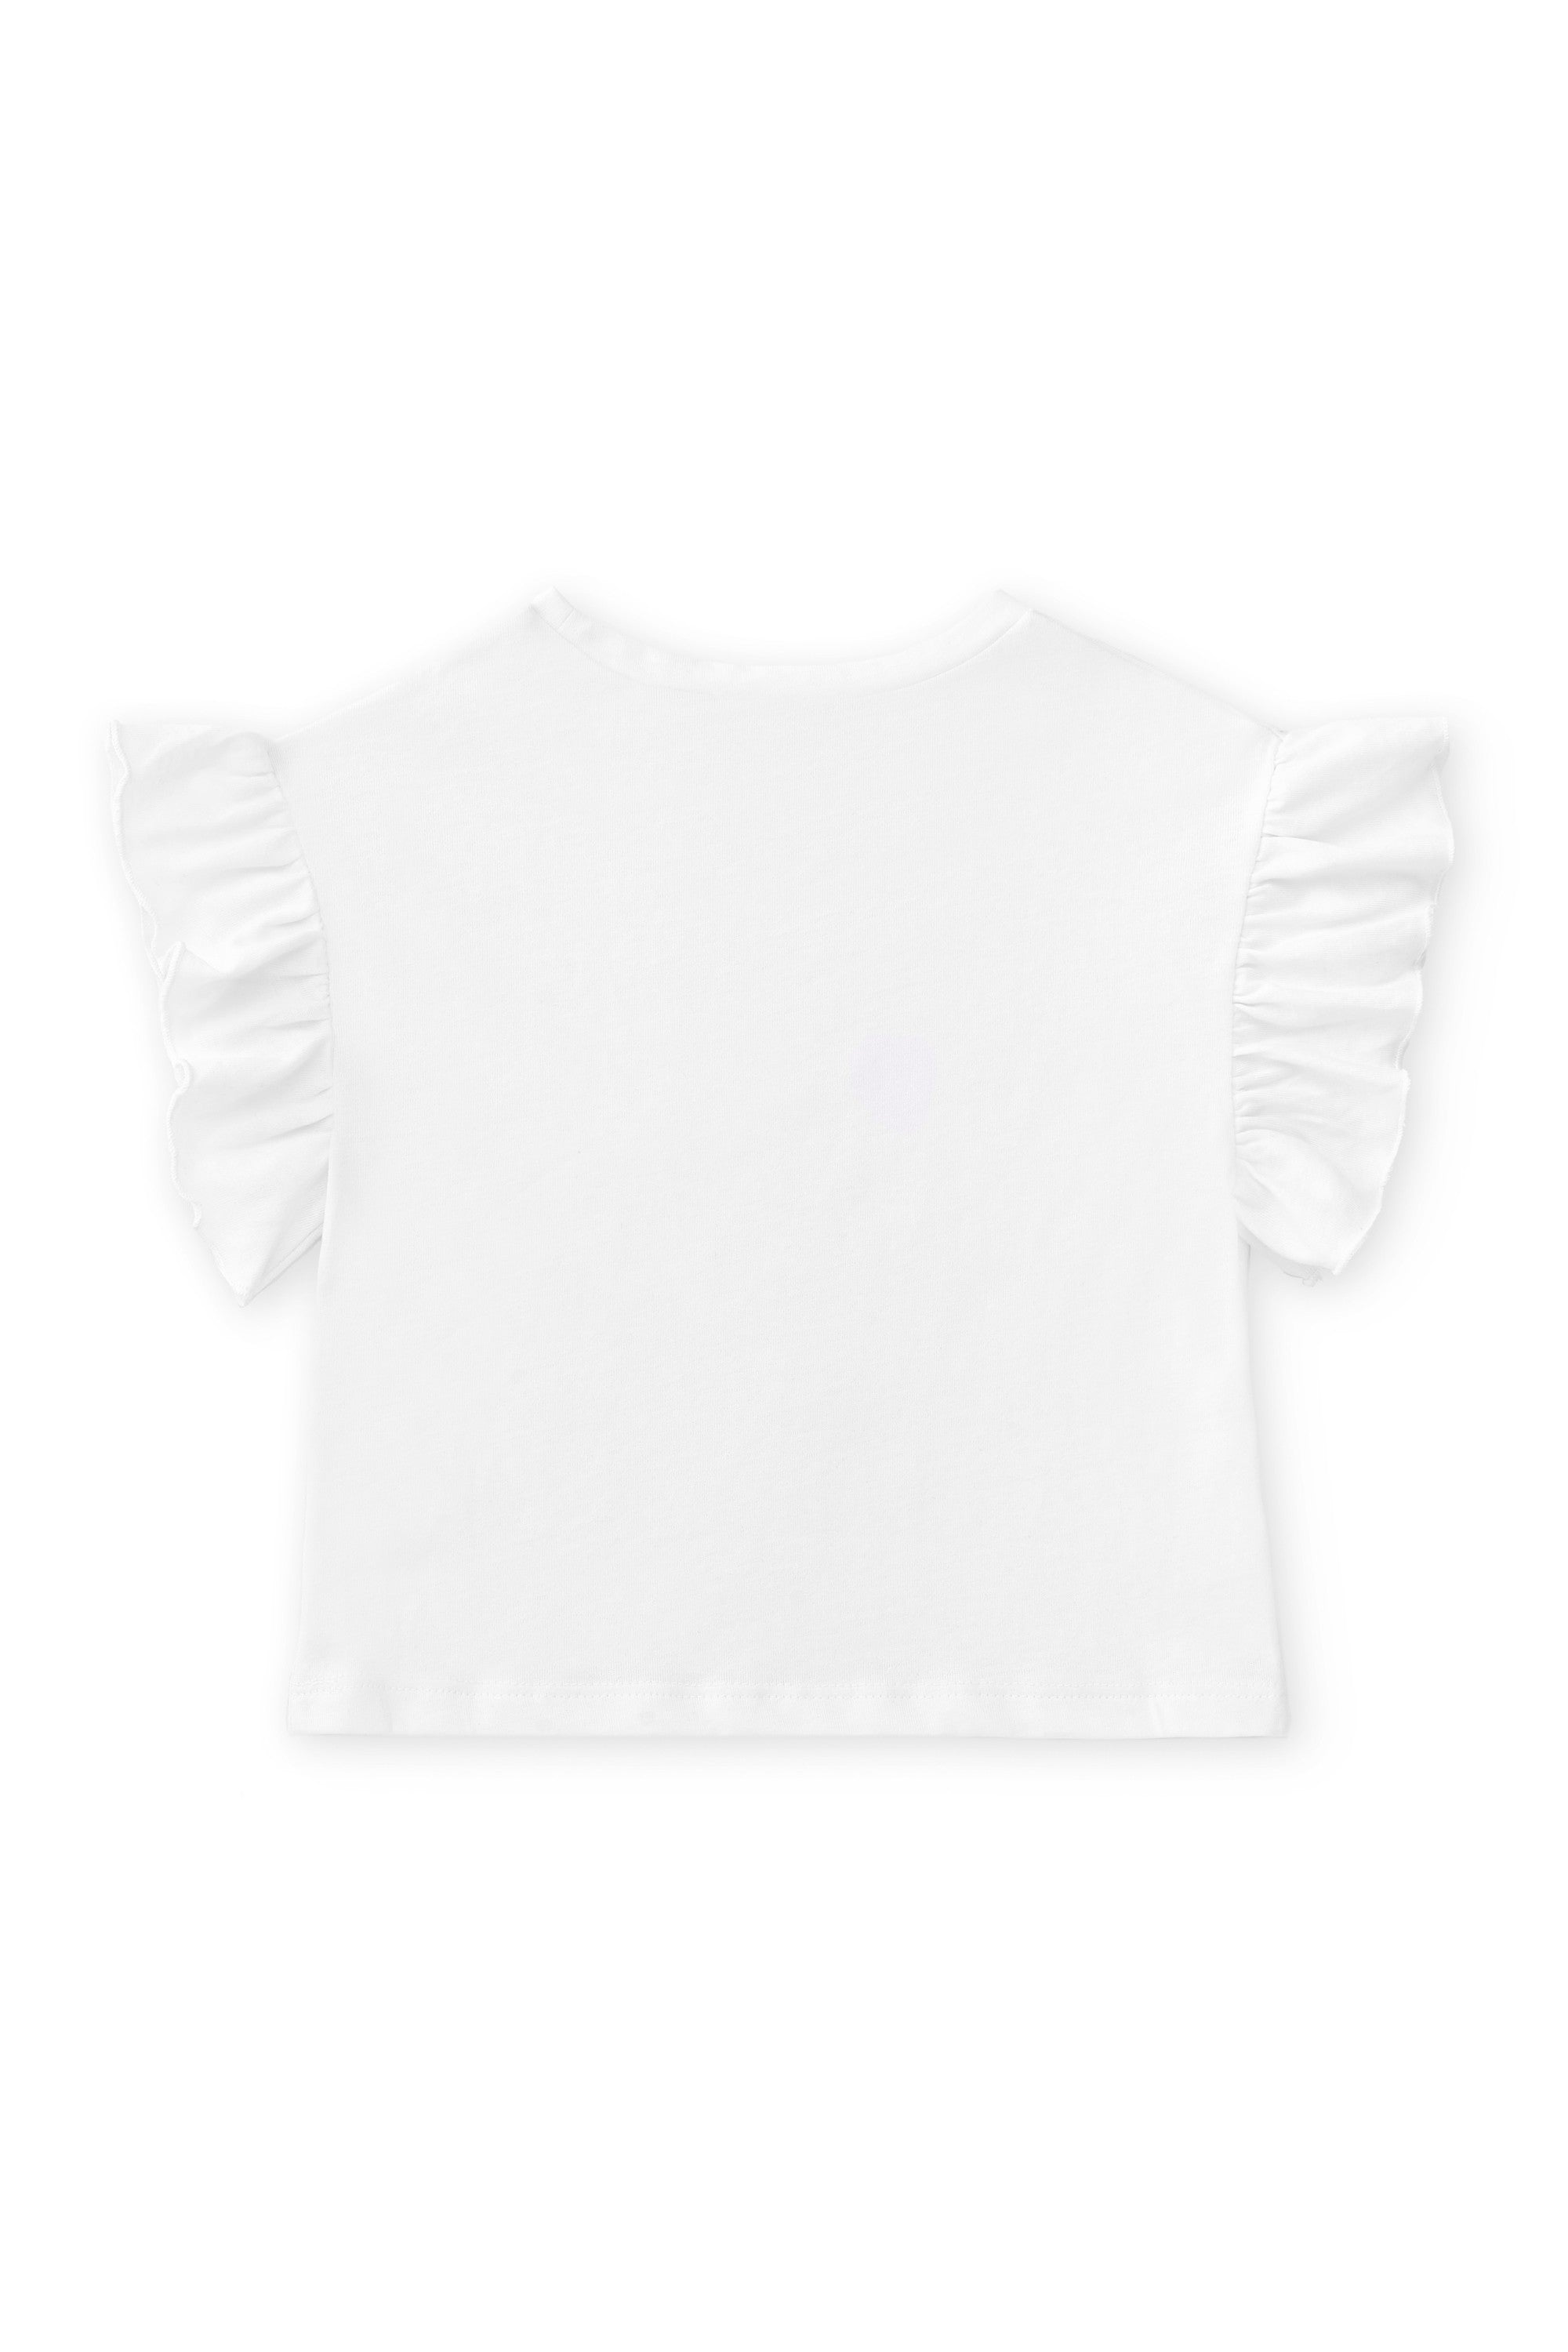 Camiseta de niña color blanco VERANO/Charanga